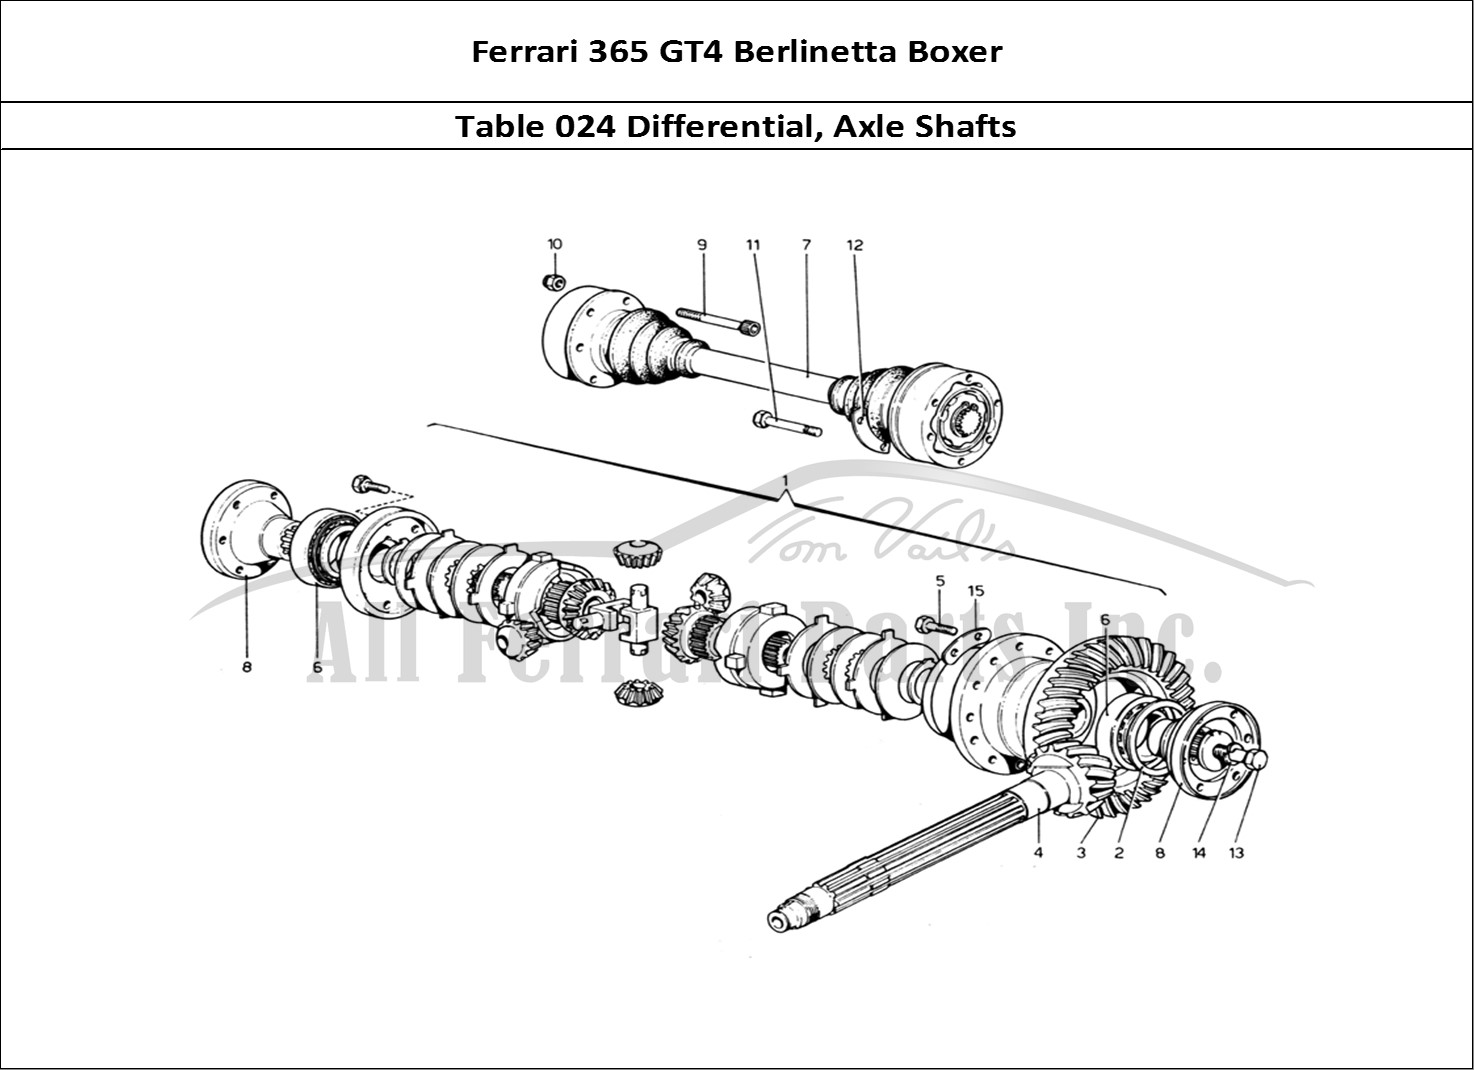 Ferrari Parts Ferrari 365 GT4 Berlinetta Boxer Page 024 Differential & Axle Shaft